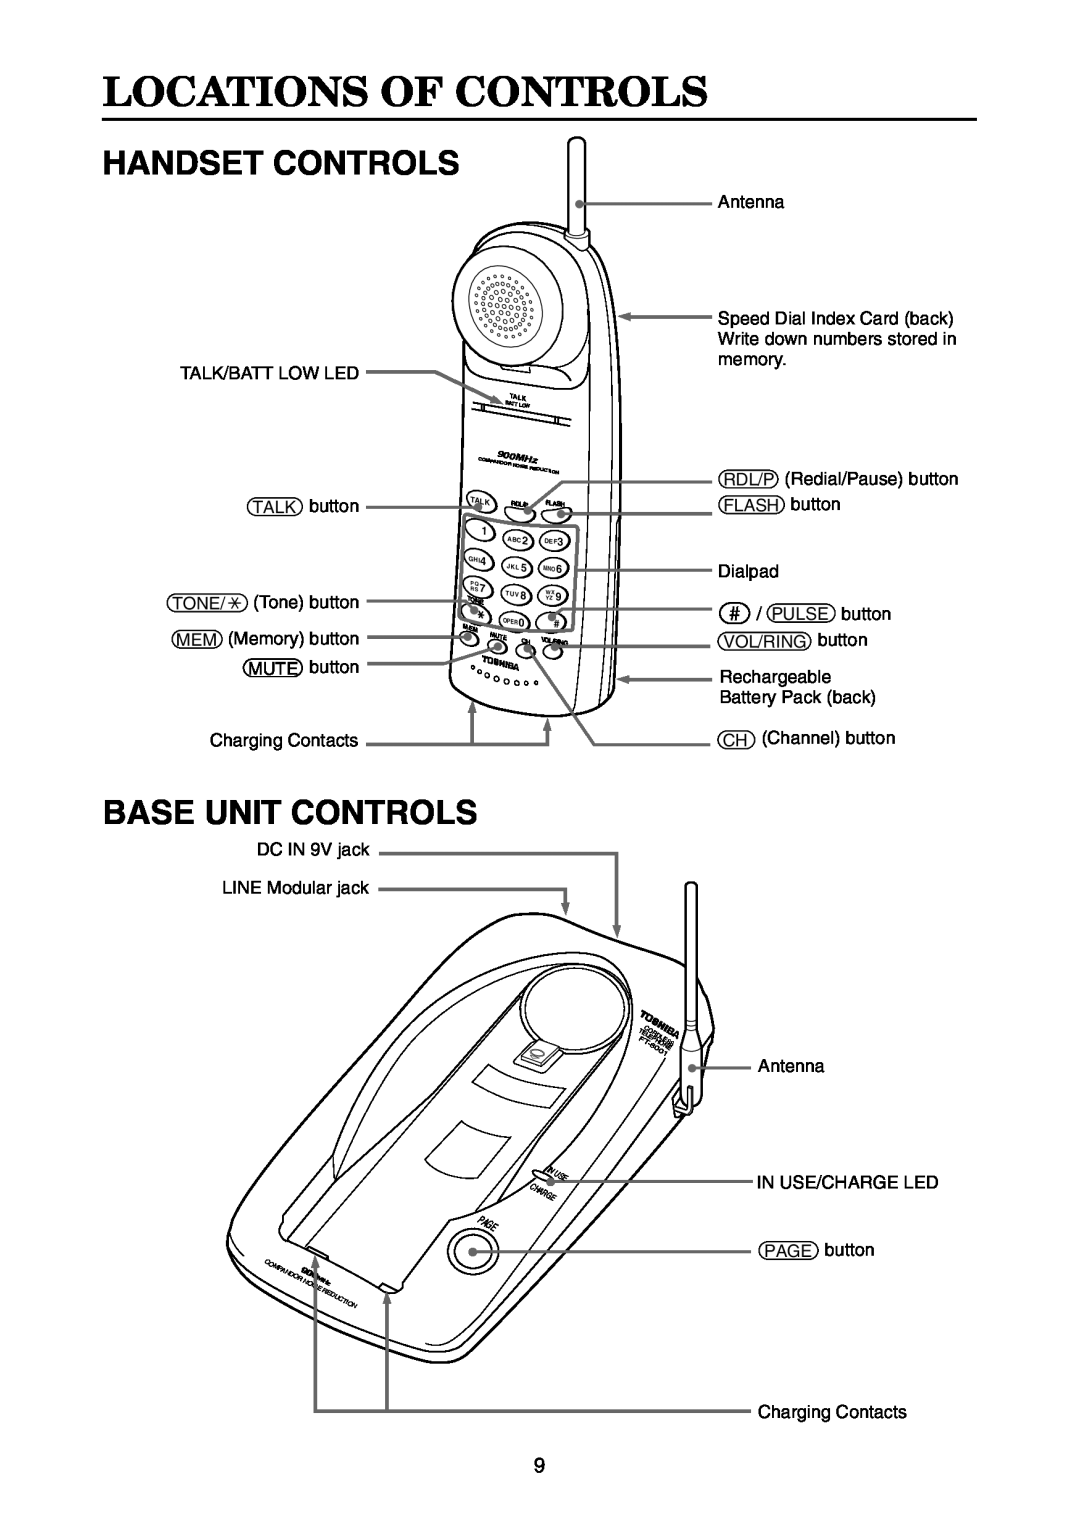 Toshiba FT-8001 AW manual Locations Of Controls, Handset Controls, Base Unit Controls 